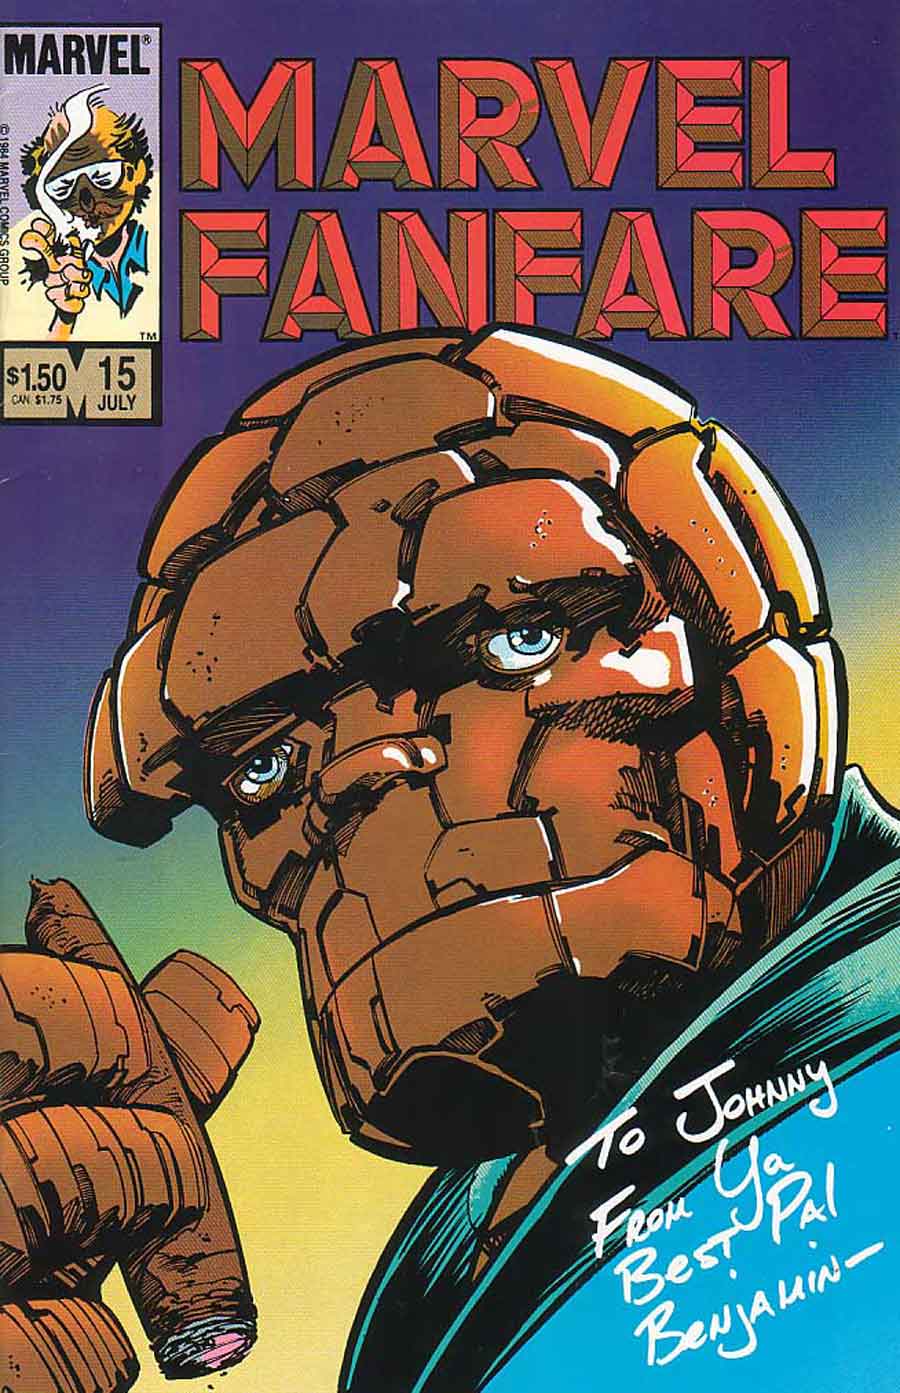 Marvel Fanfare #15 - Barry Windsor Smith 1980s marvel comic book cover